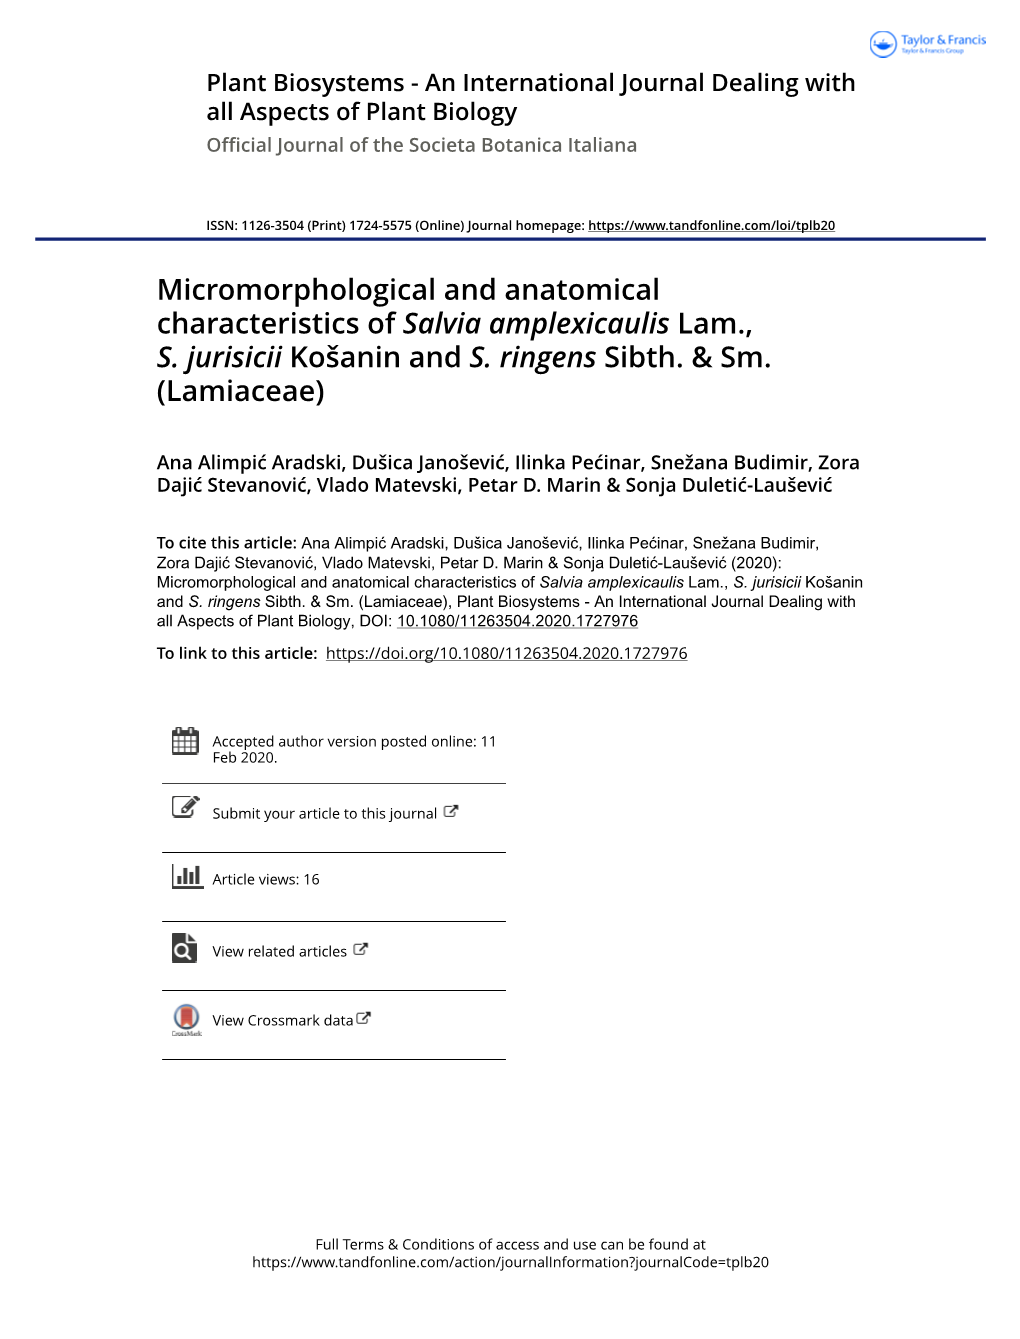 Micromorphological and Anatomical Characteristics of Salvia Amplexicaulis Lam., S